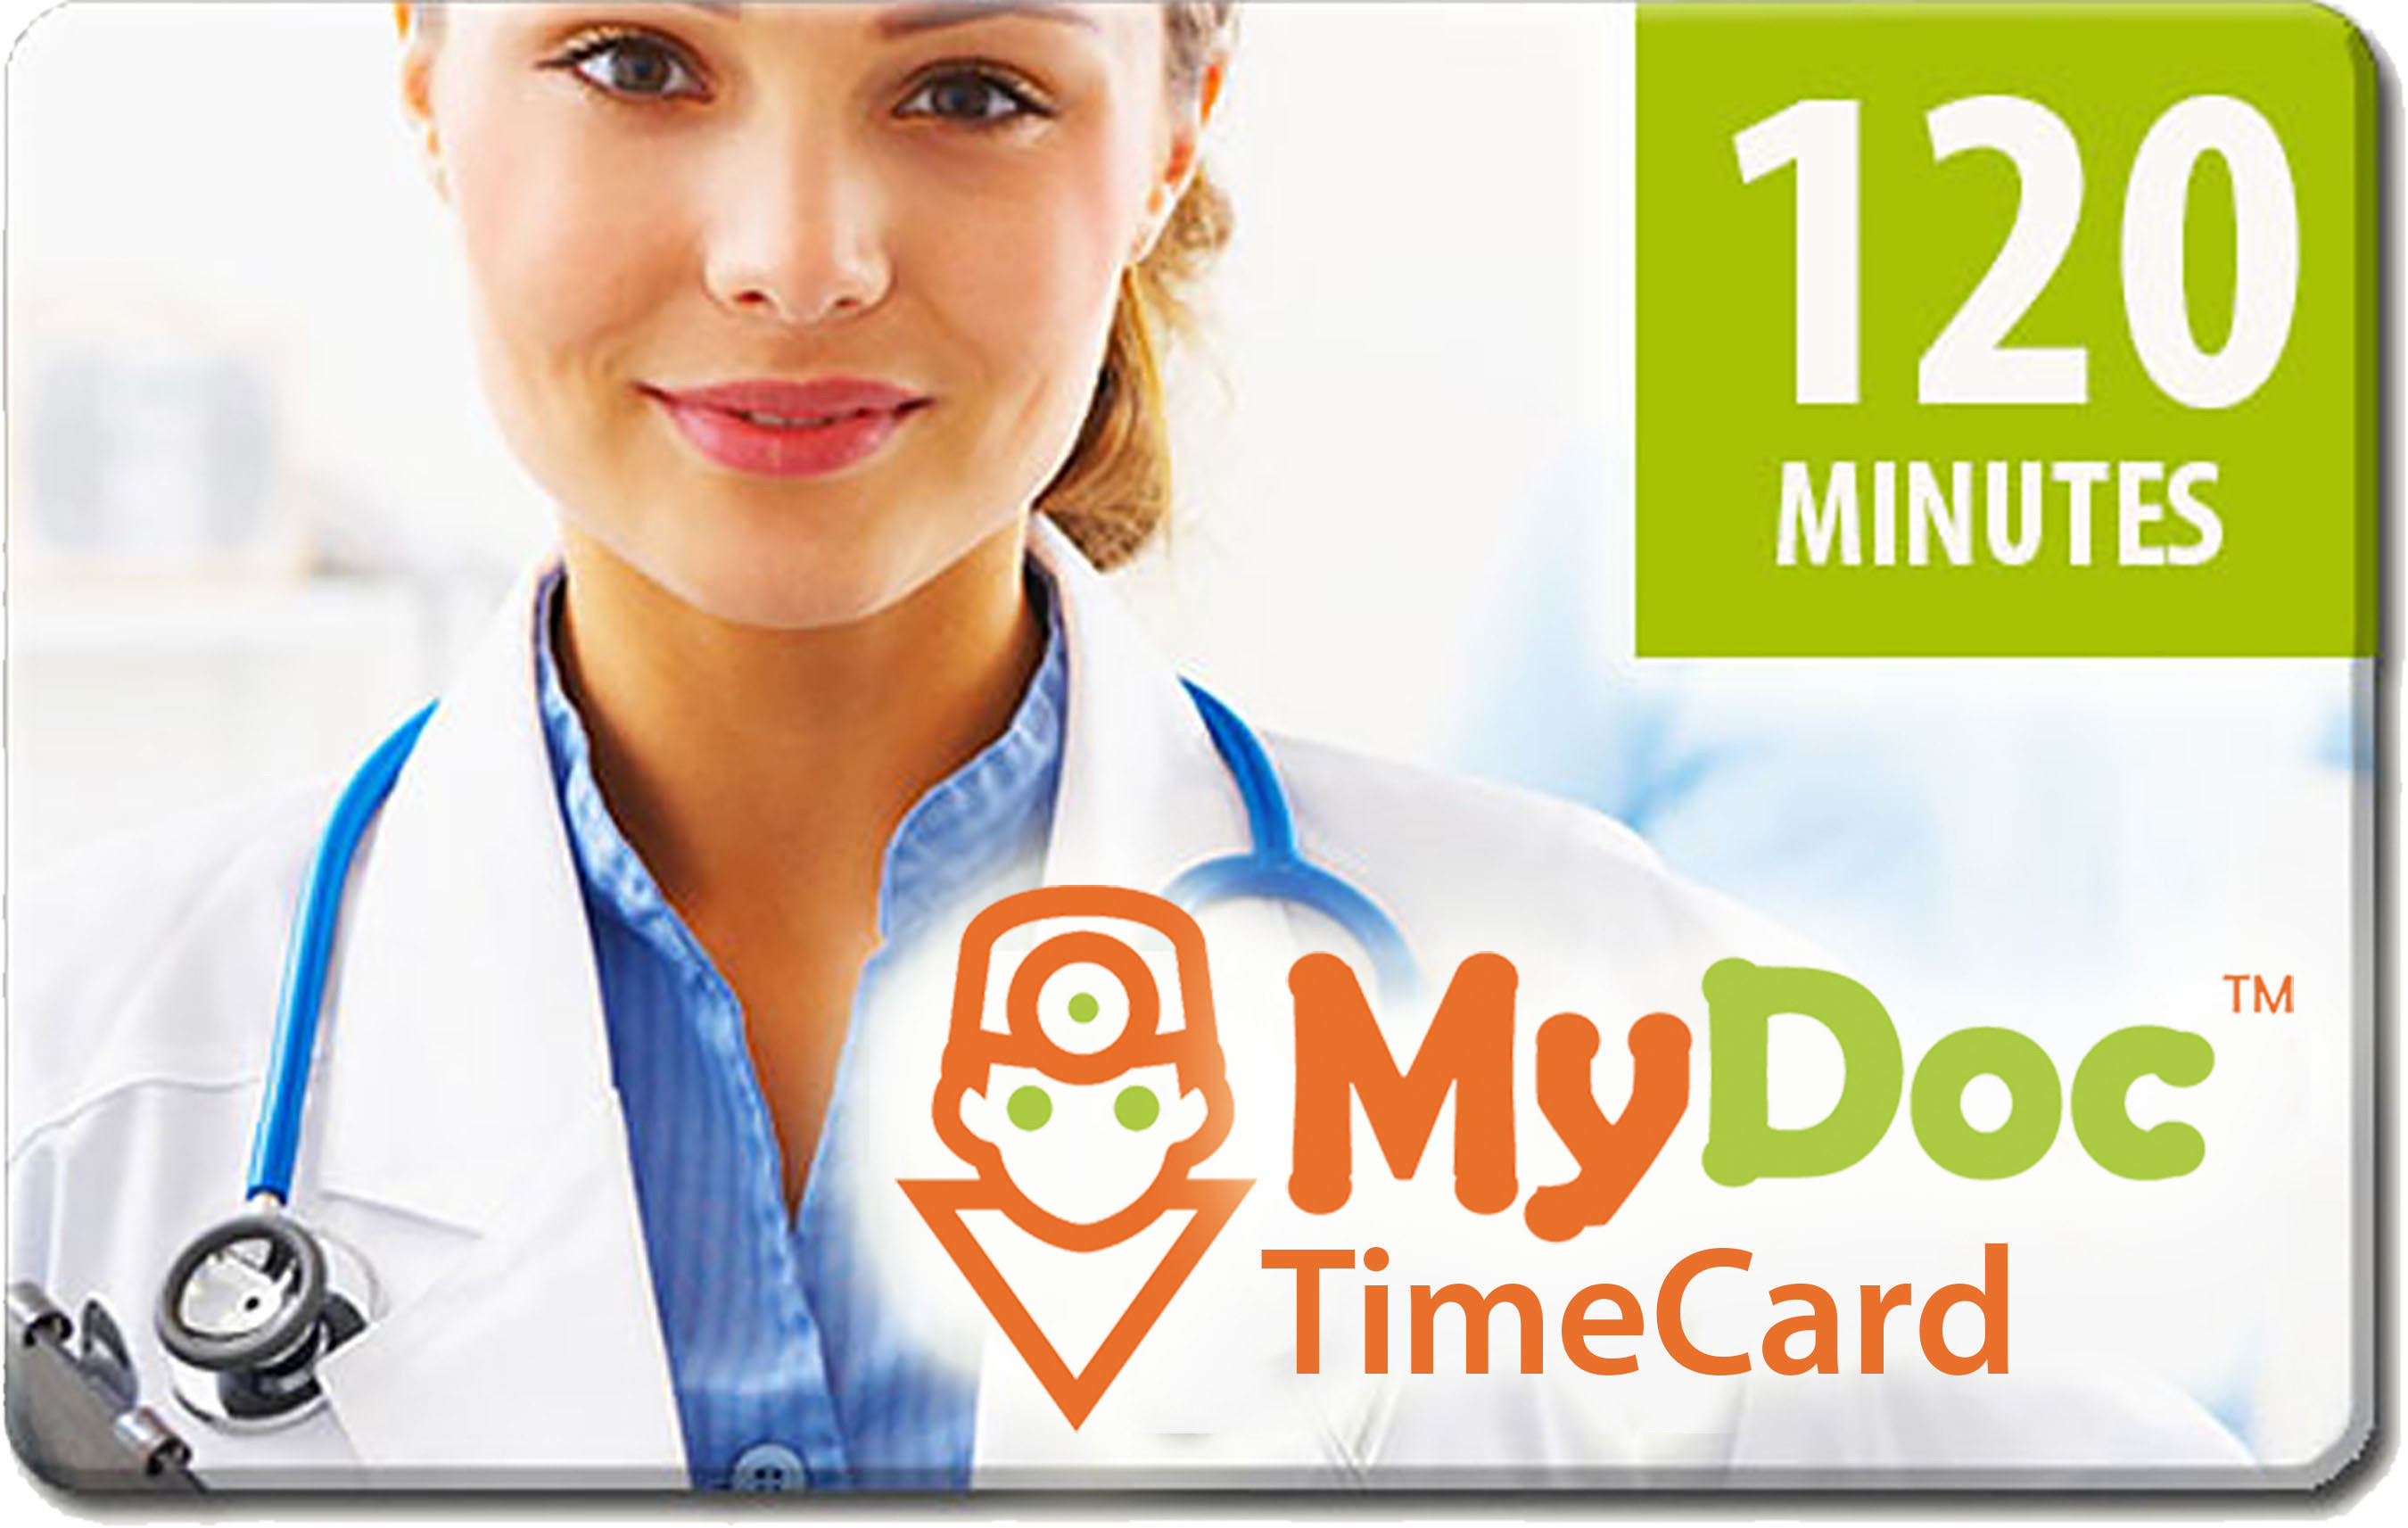 MyDoc 120 Minute TimeCard. (PRNewsFoto/MyDocTV.com, Inc.) (PRNewsFoto/MYDOCTV.COM, INC.)